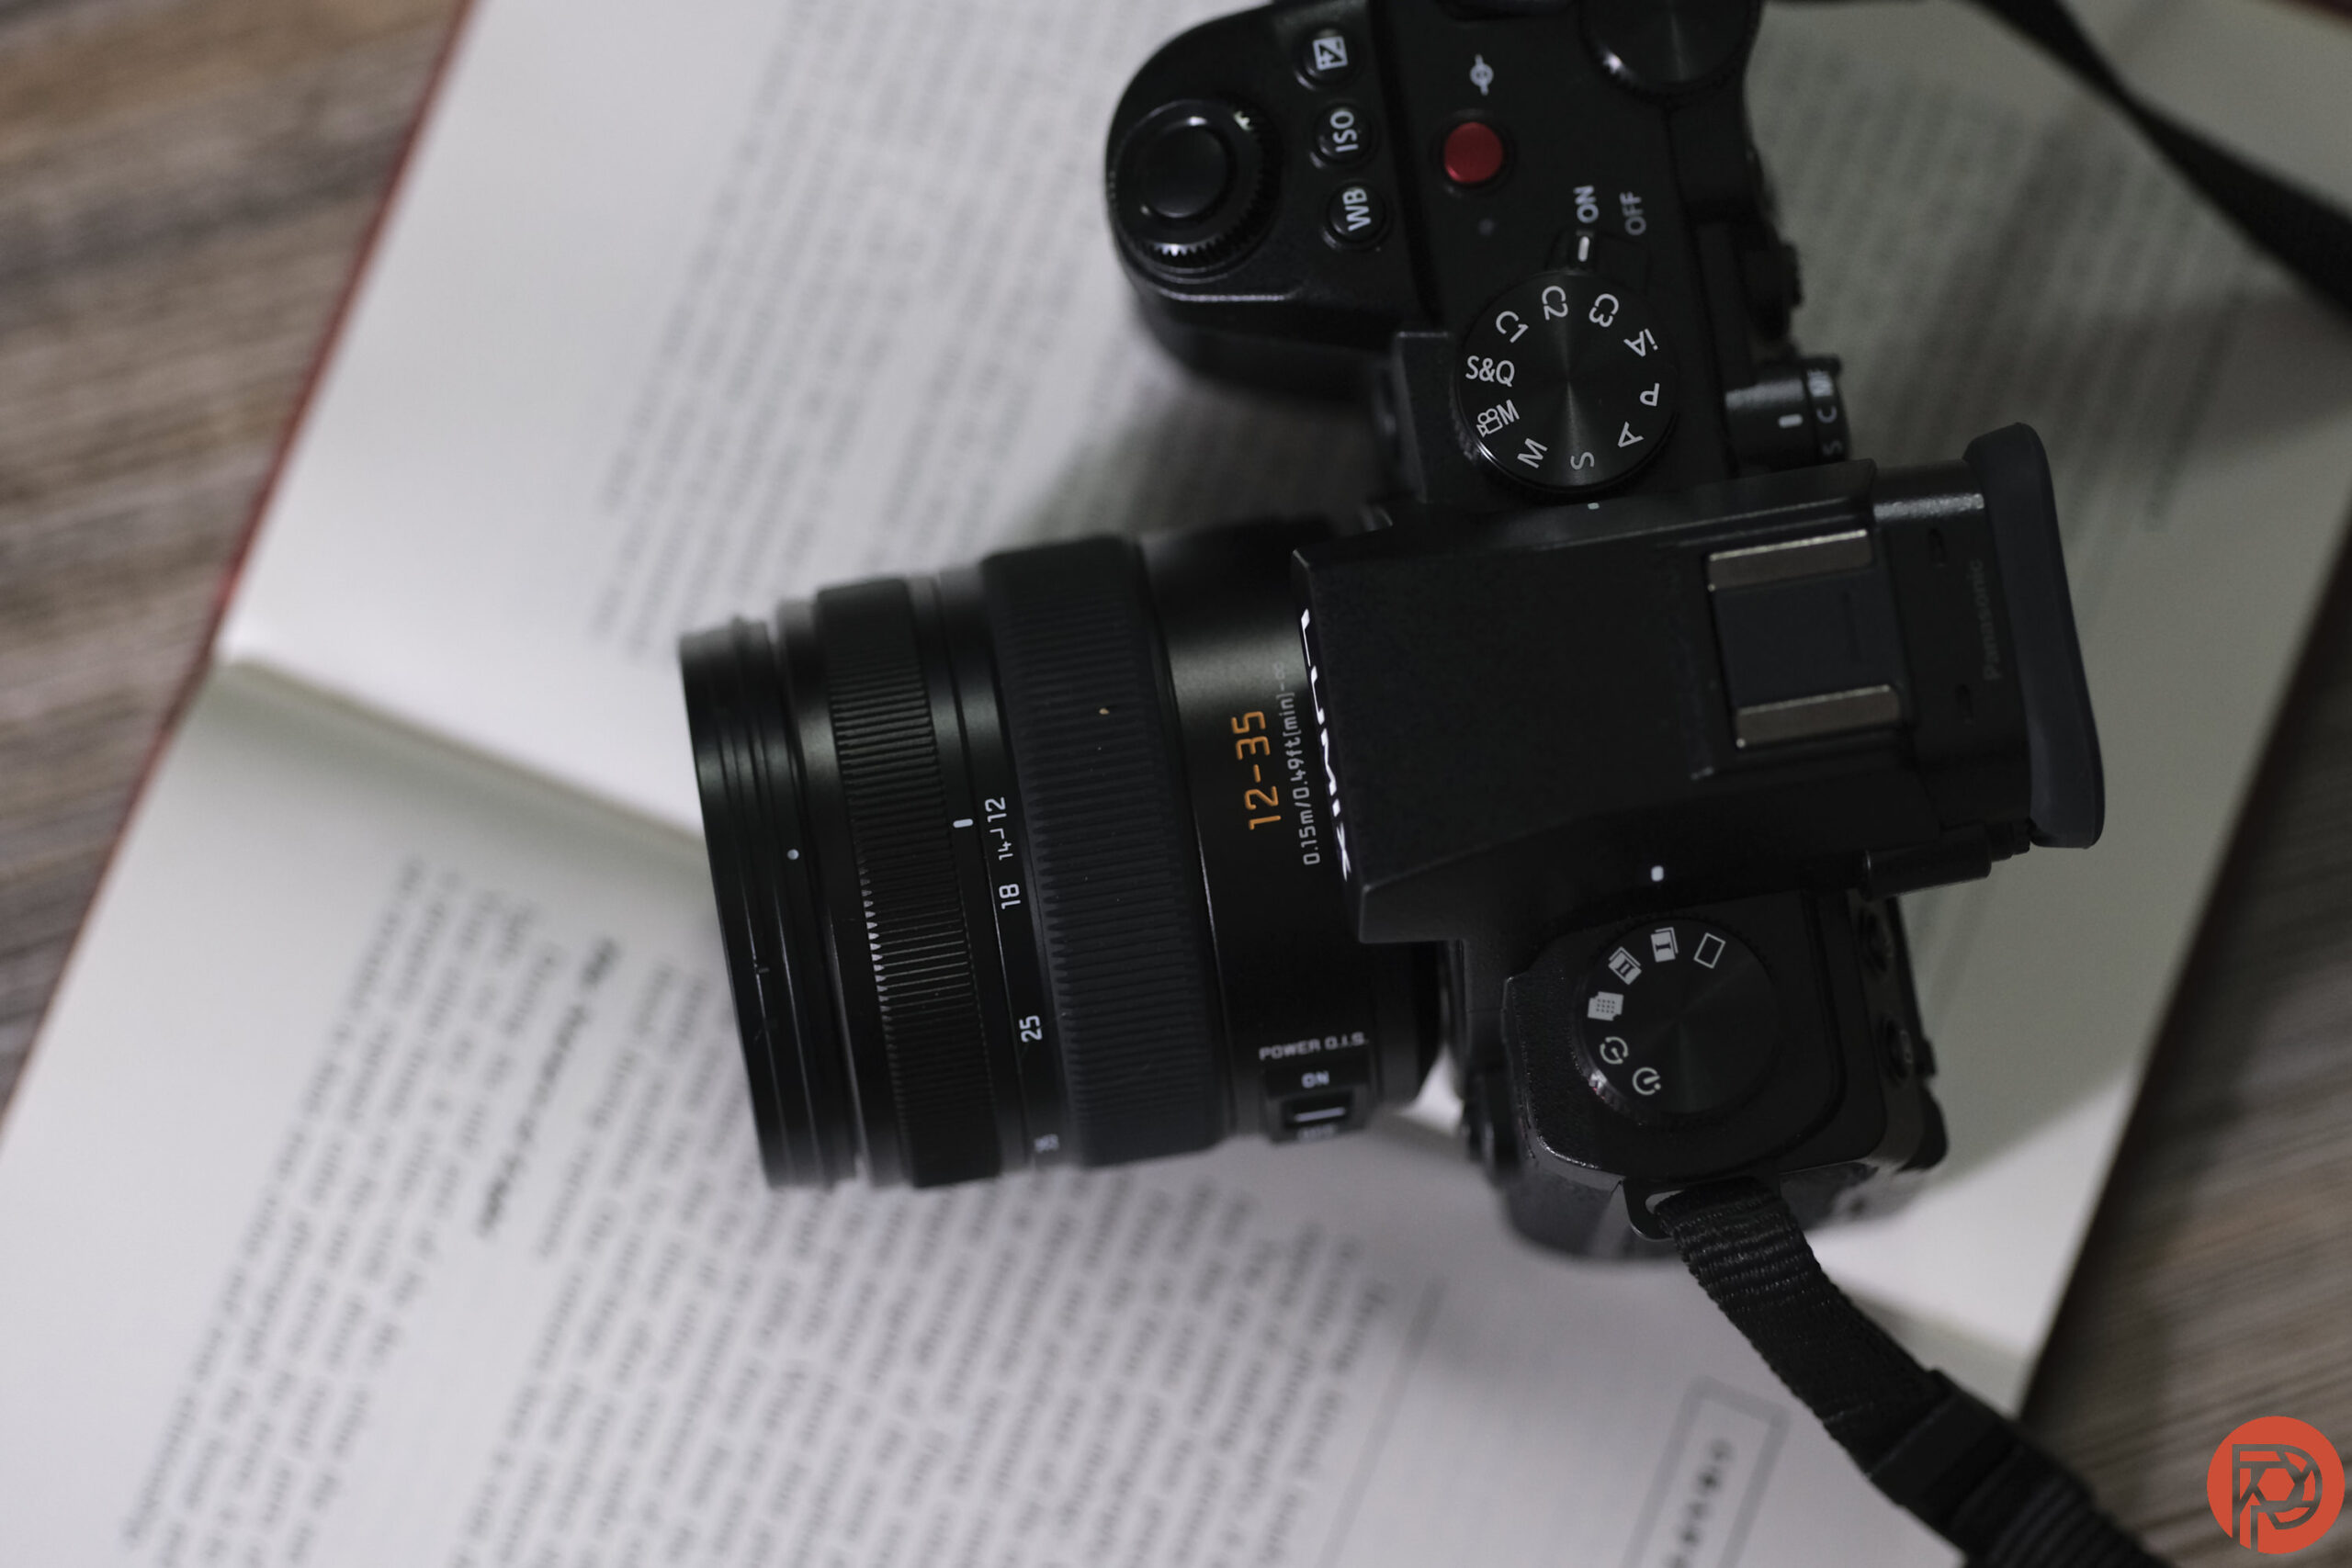 Hillary Grigonis The Phoblographer Panasonic Leica 12-35mm f2.8 review DSCF1229